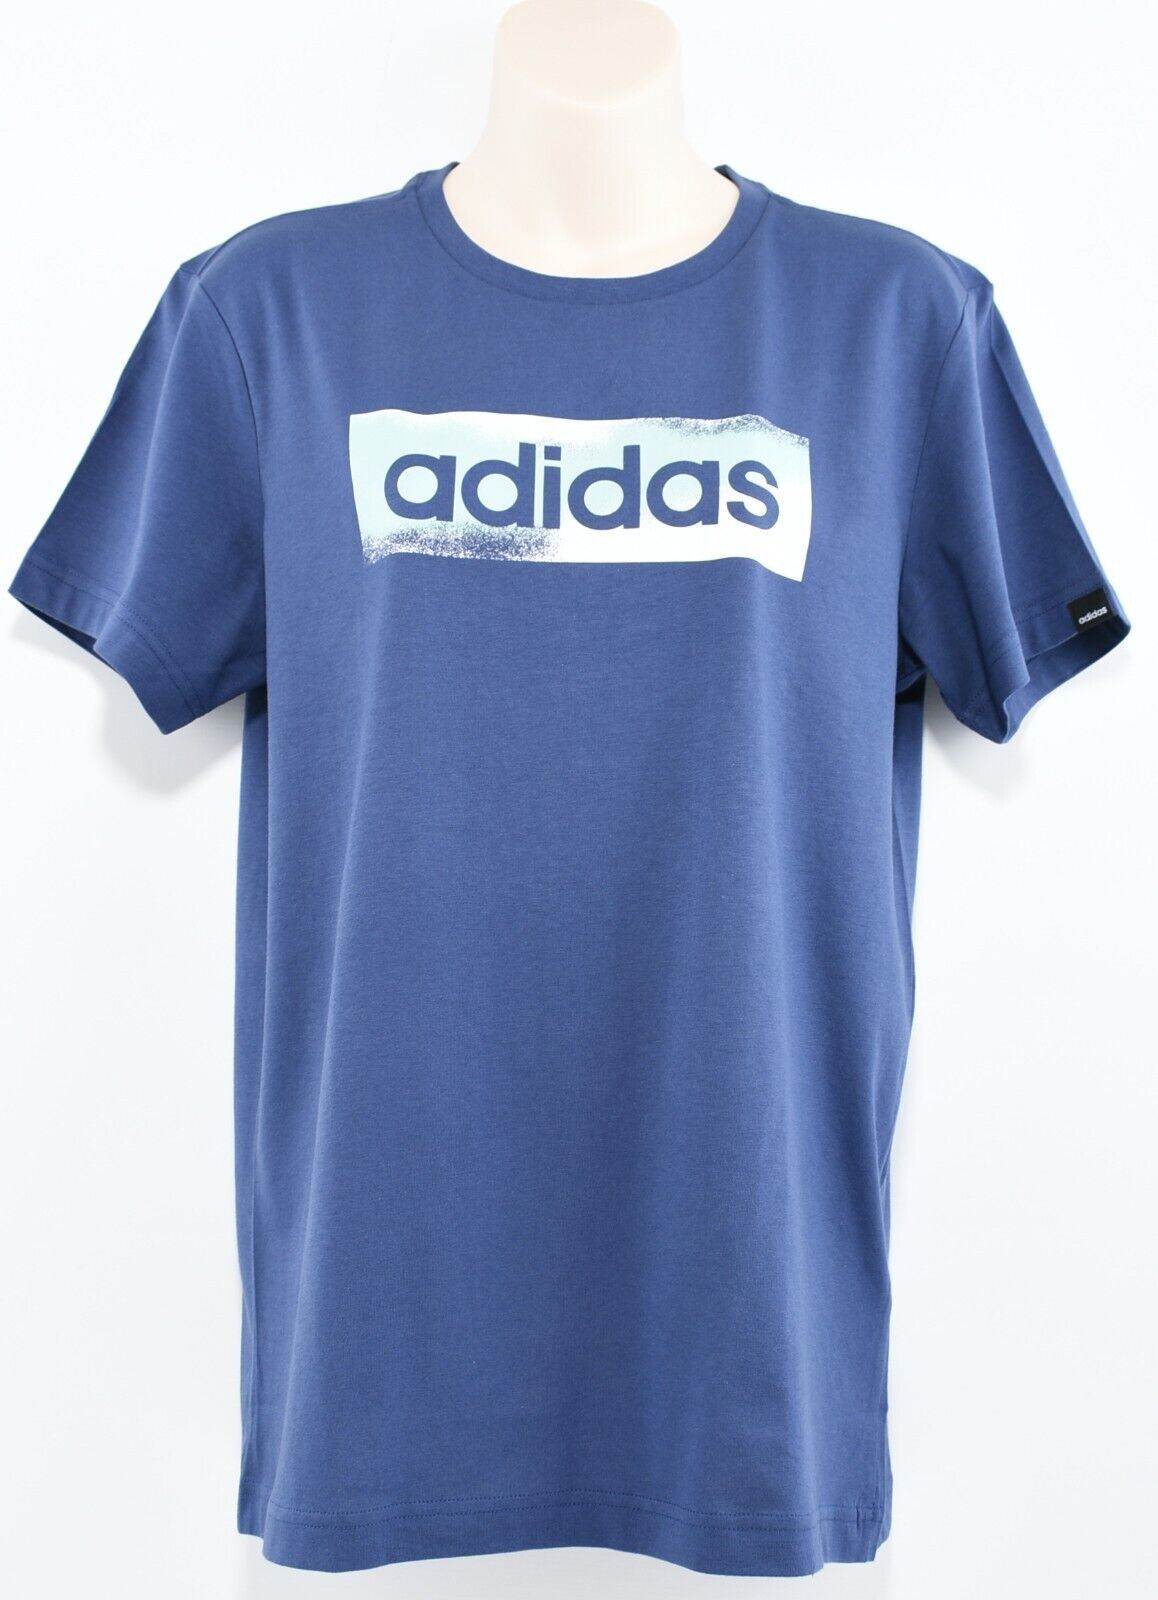 ADIDAS Women's Crew Neck Logo T-shirt, Tee, Indigo Blue, size XS (UK 4-6)